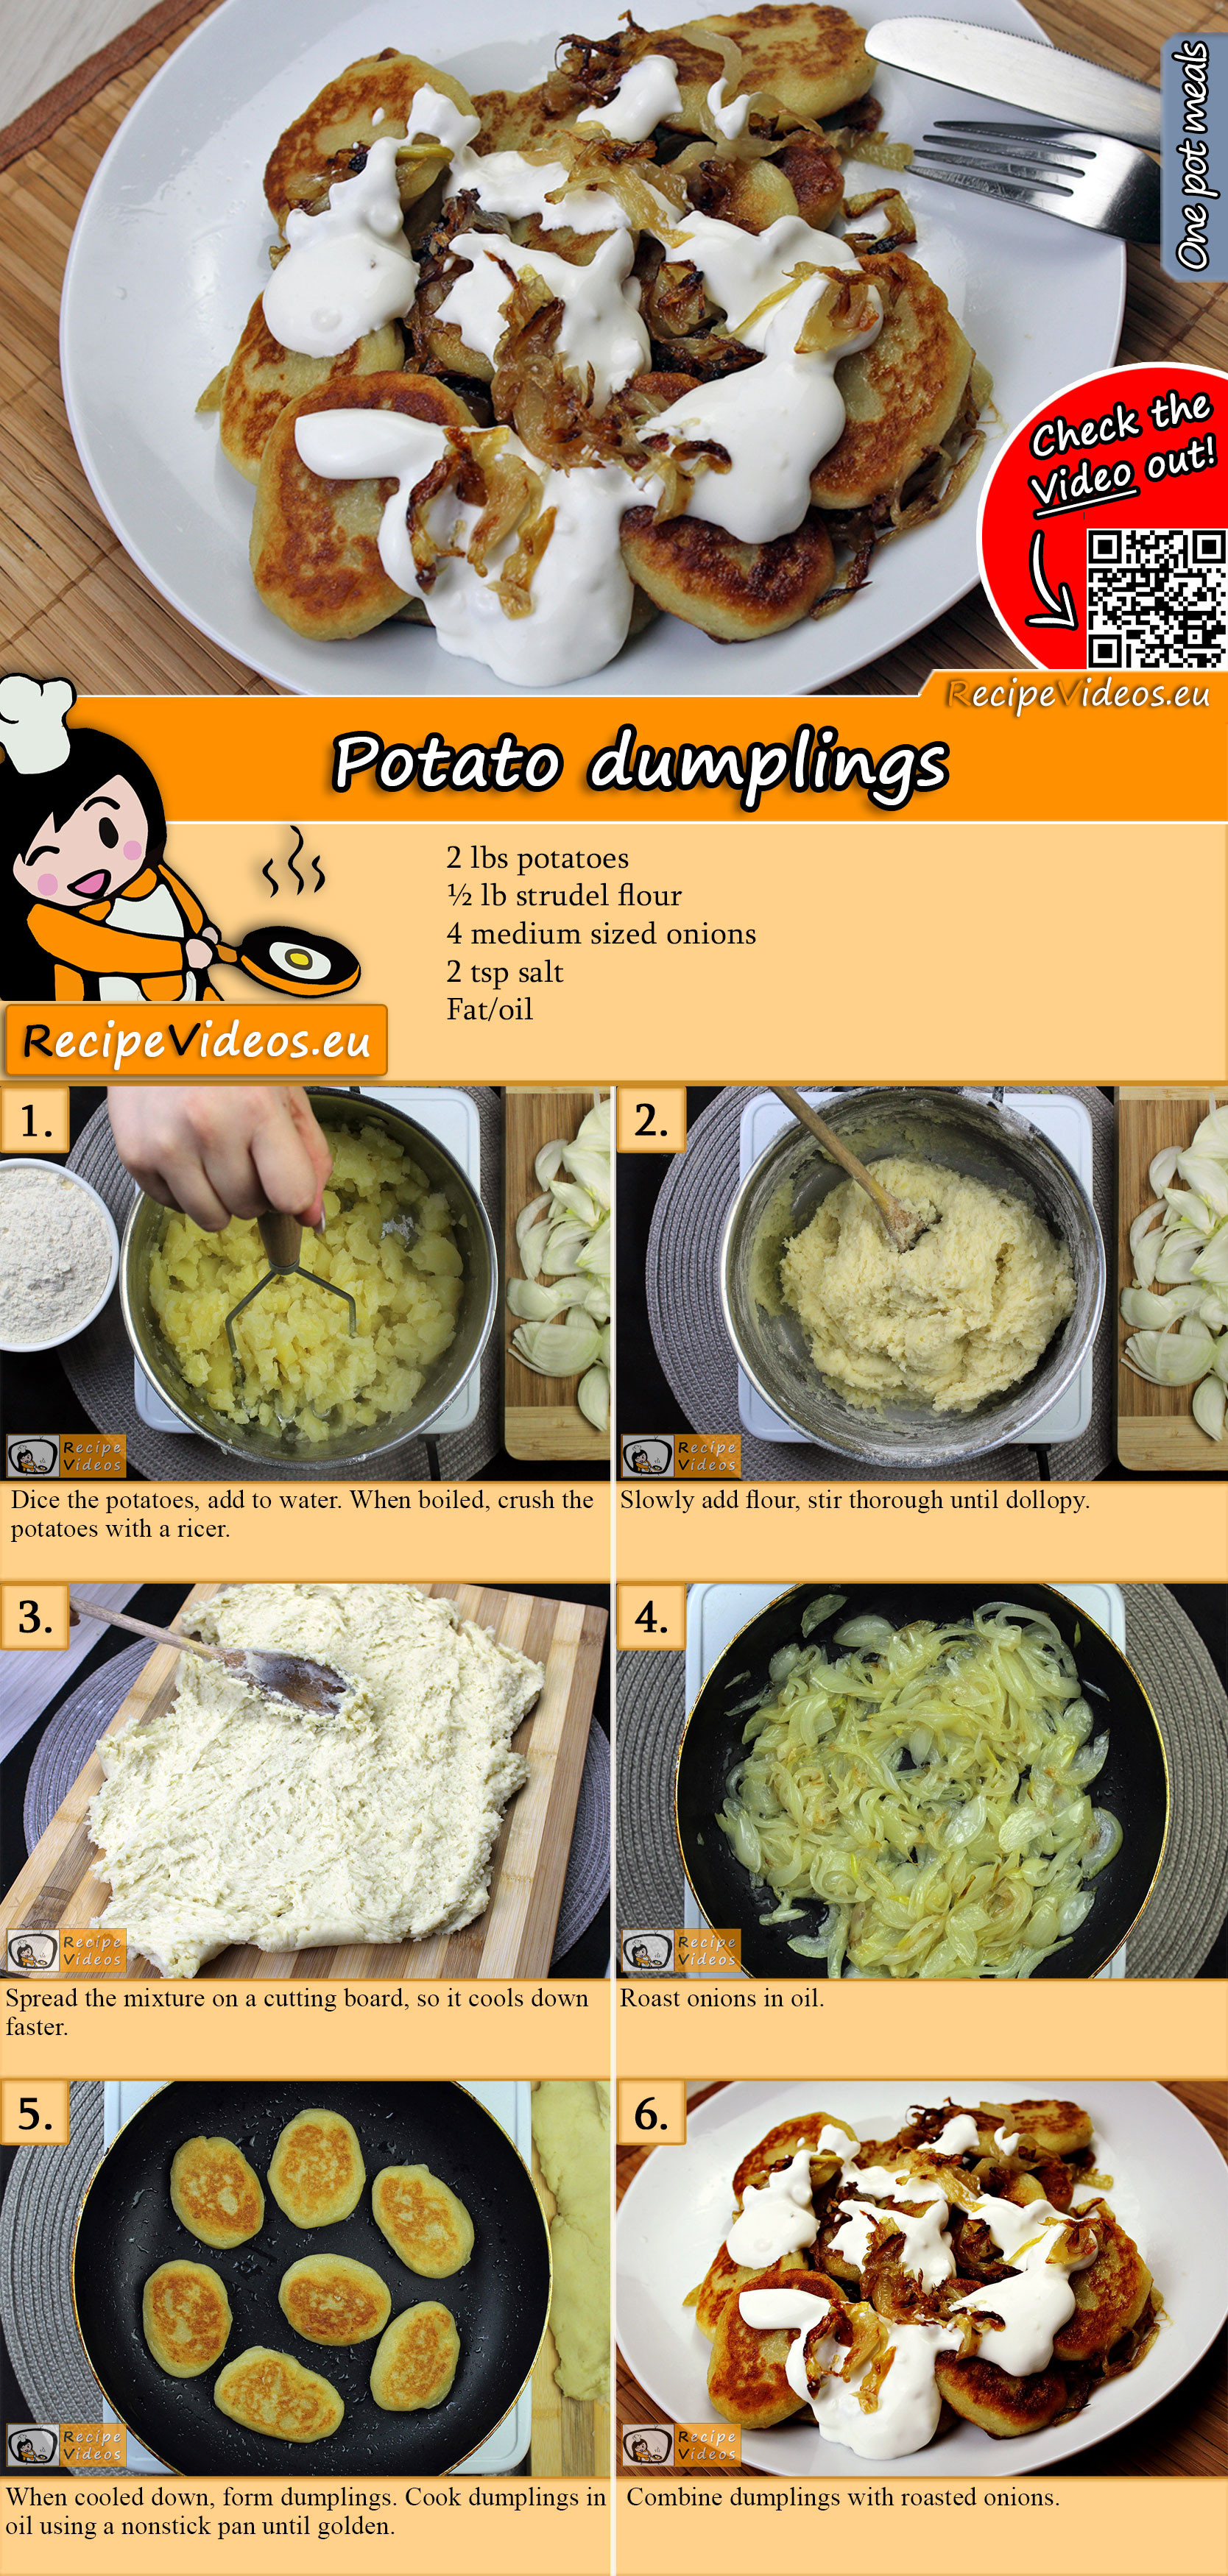 Potato dumplings recipe with video